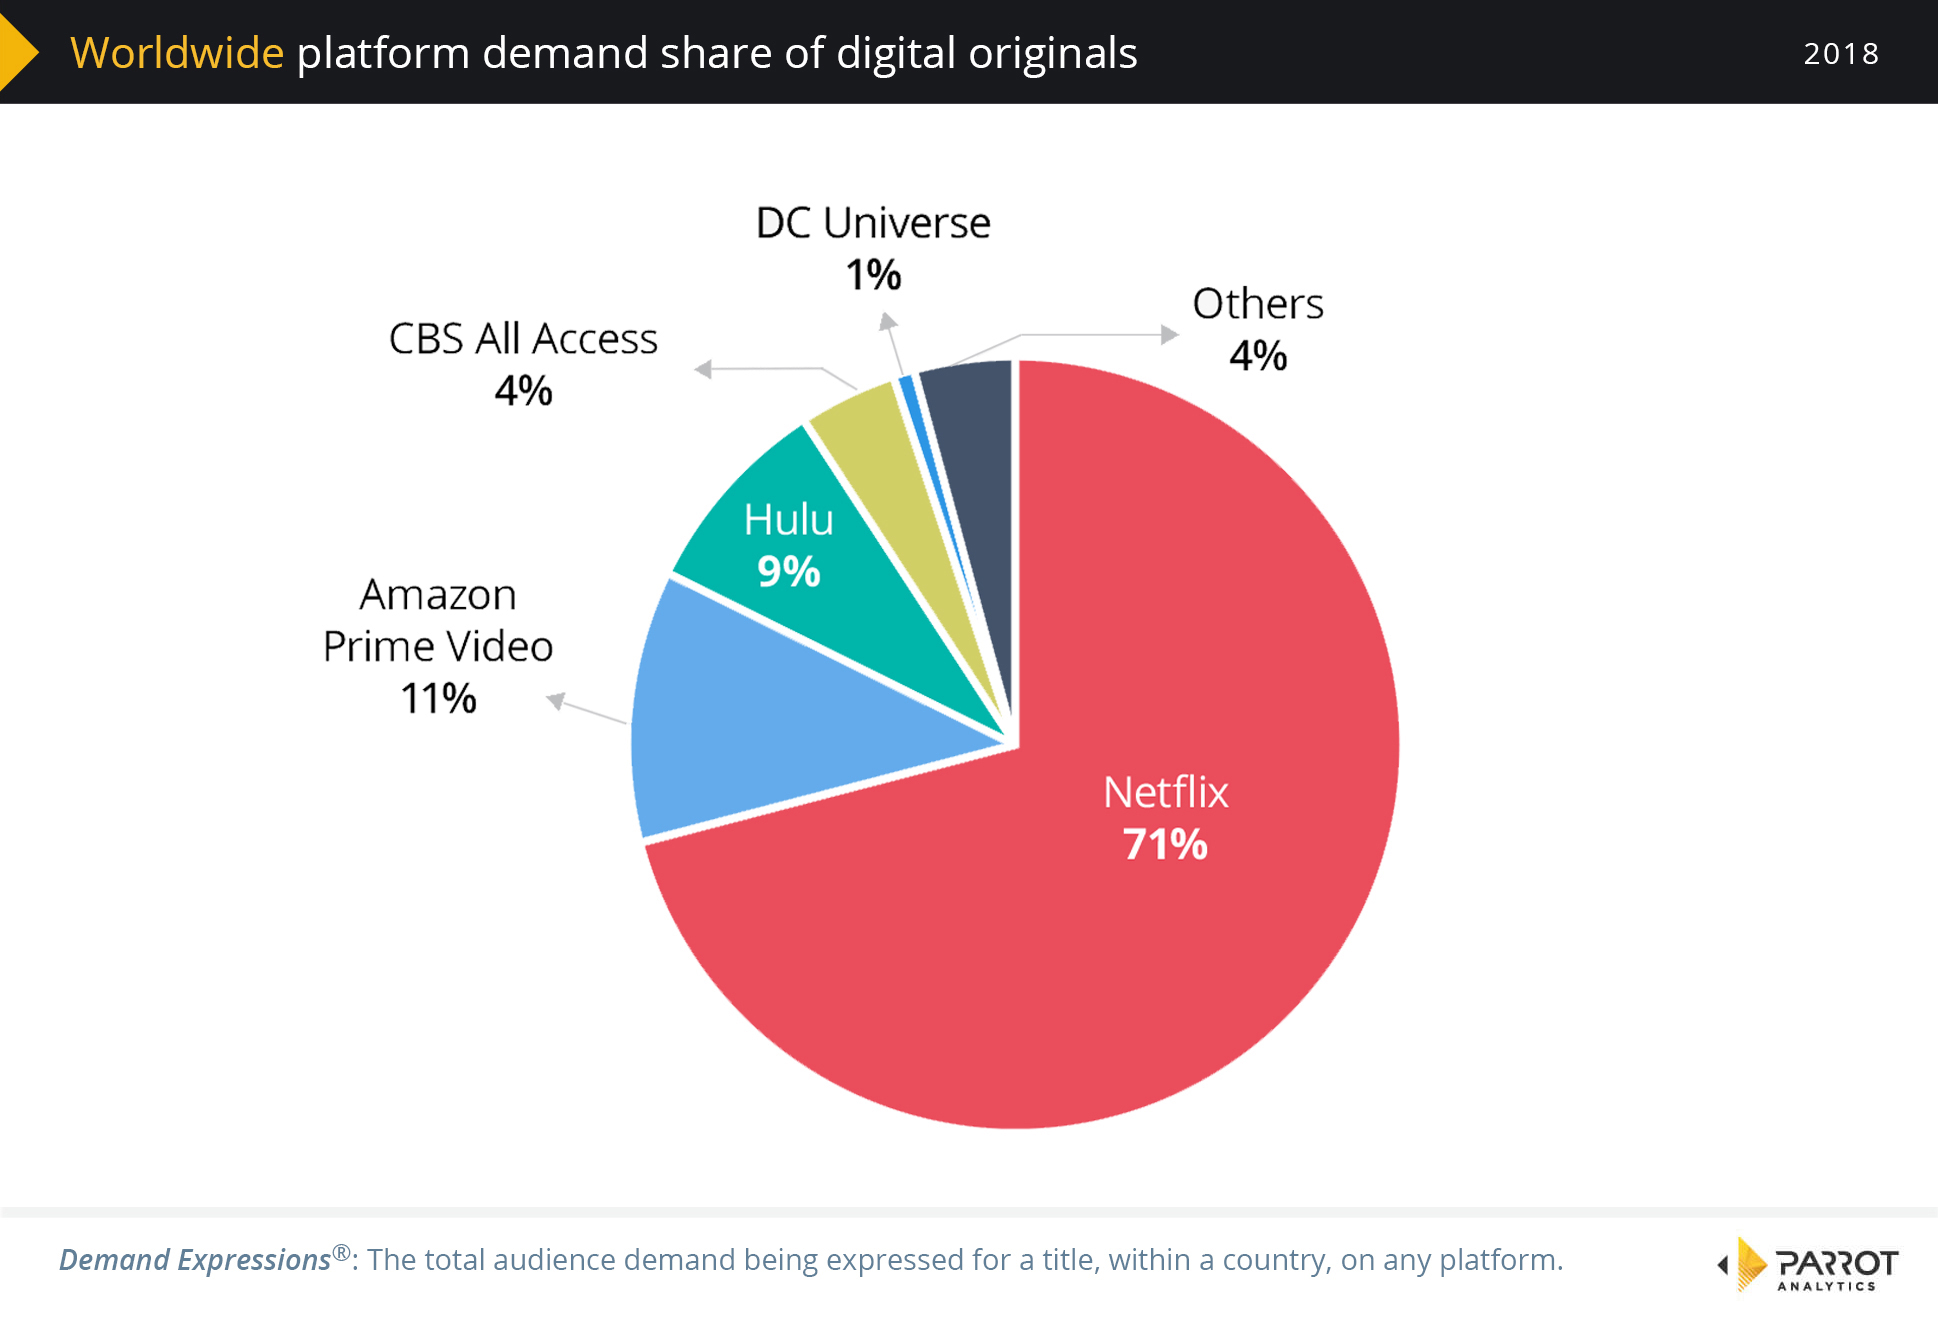 Global SVOD market share trends based on audience demand for digital originals Parrot Analytics